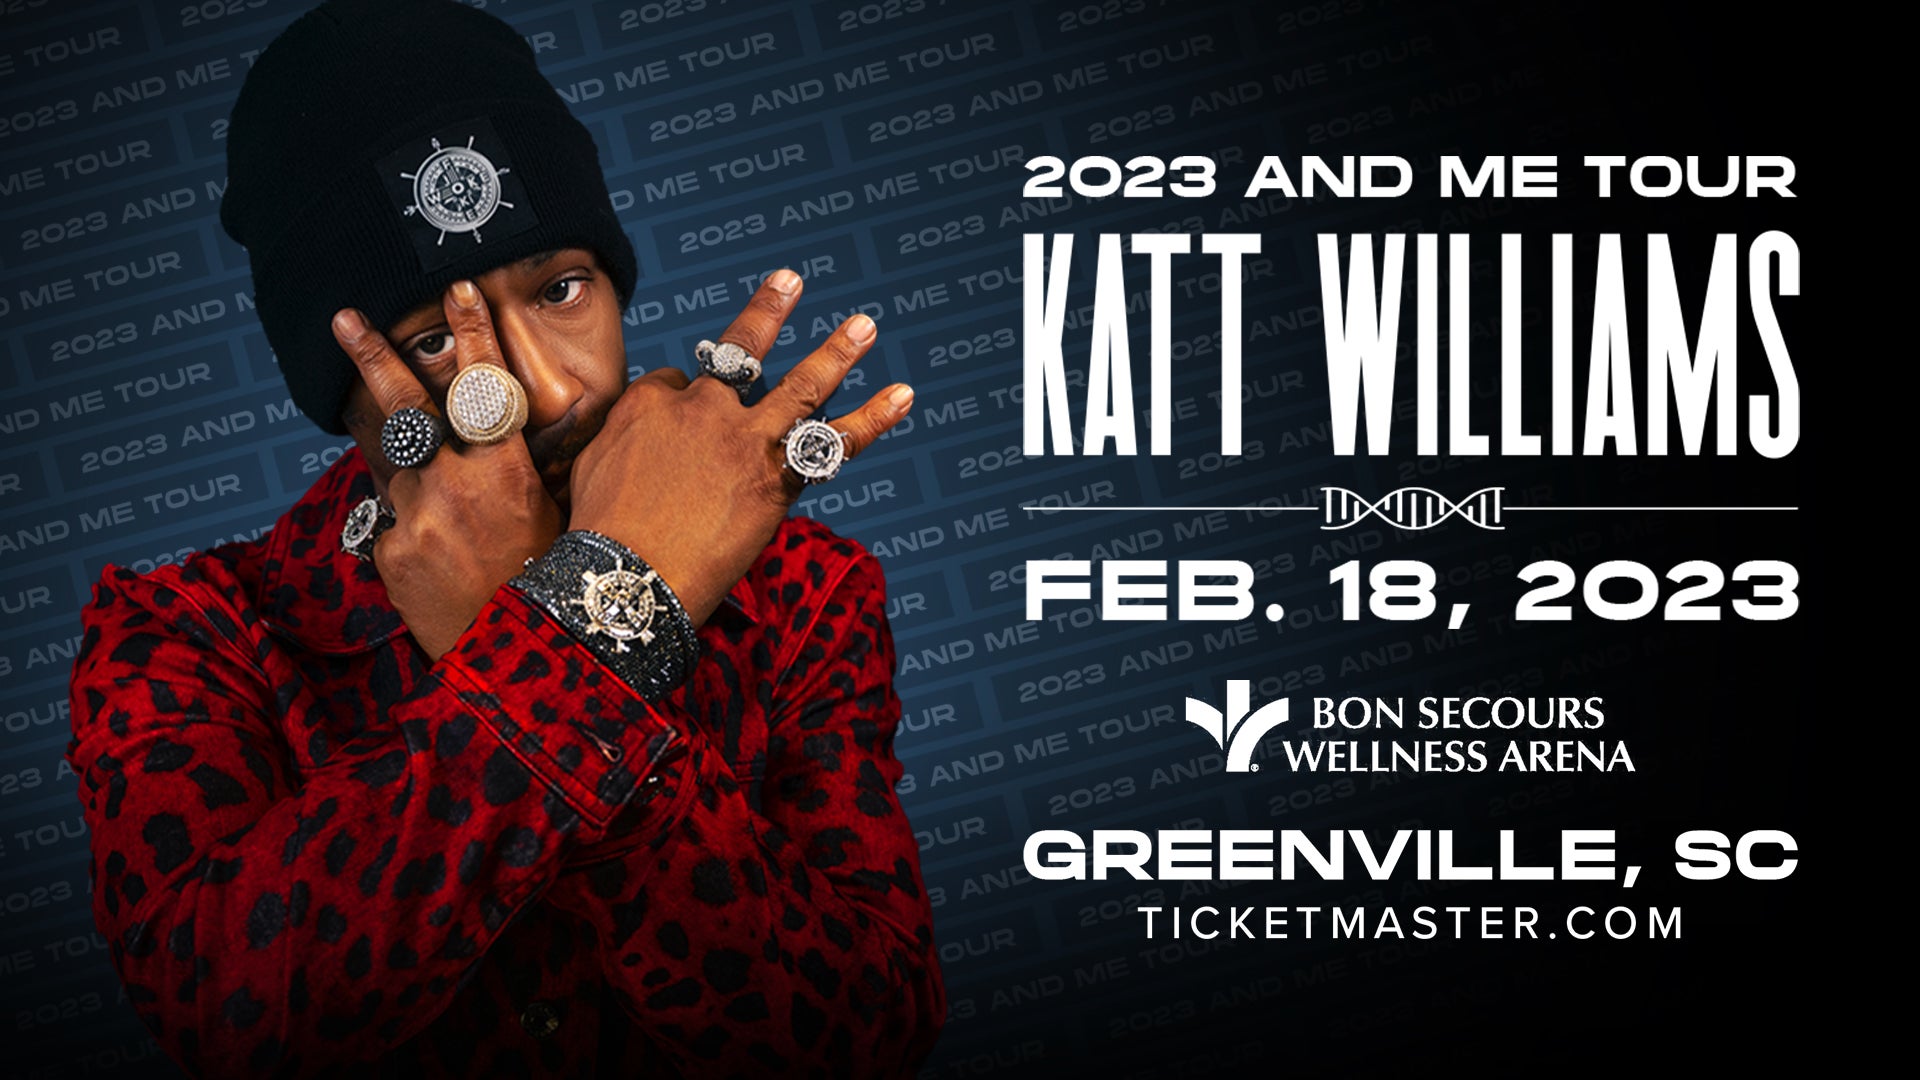 katt williams comedy tour 2023